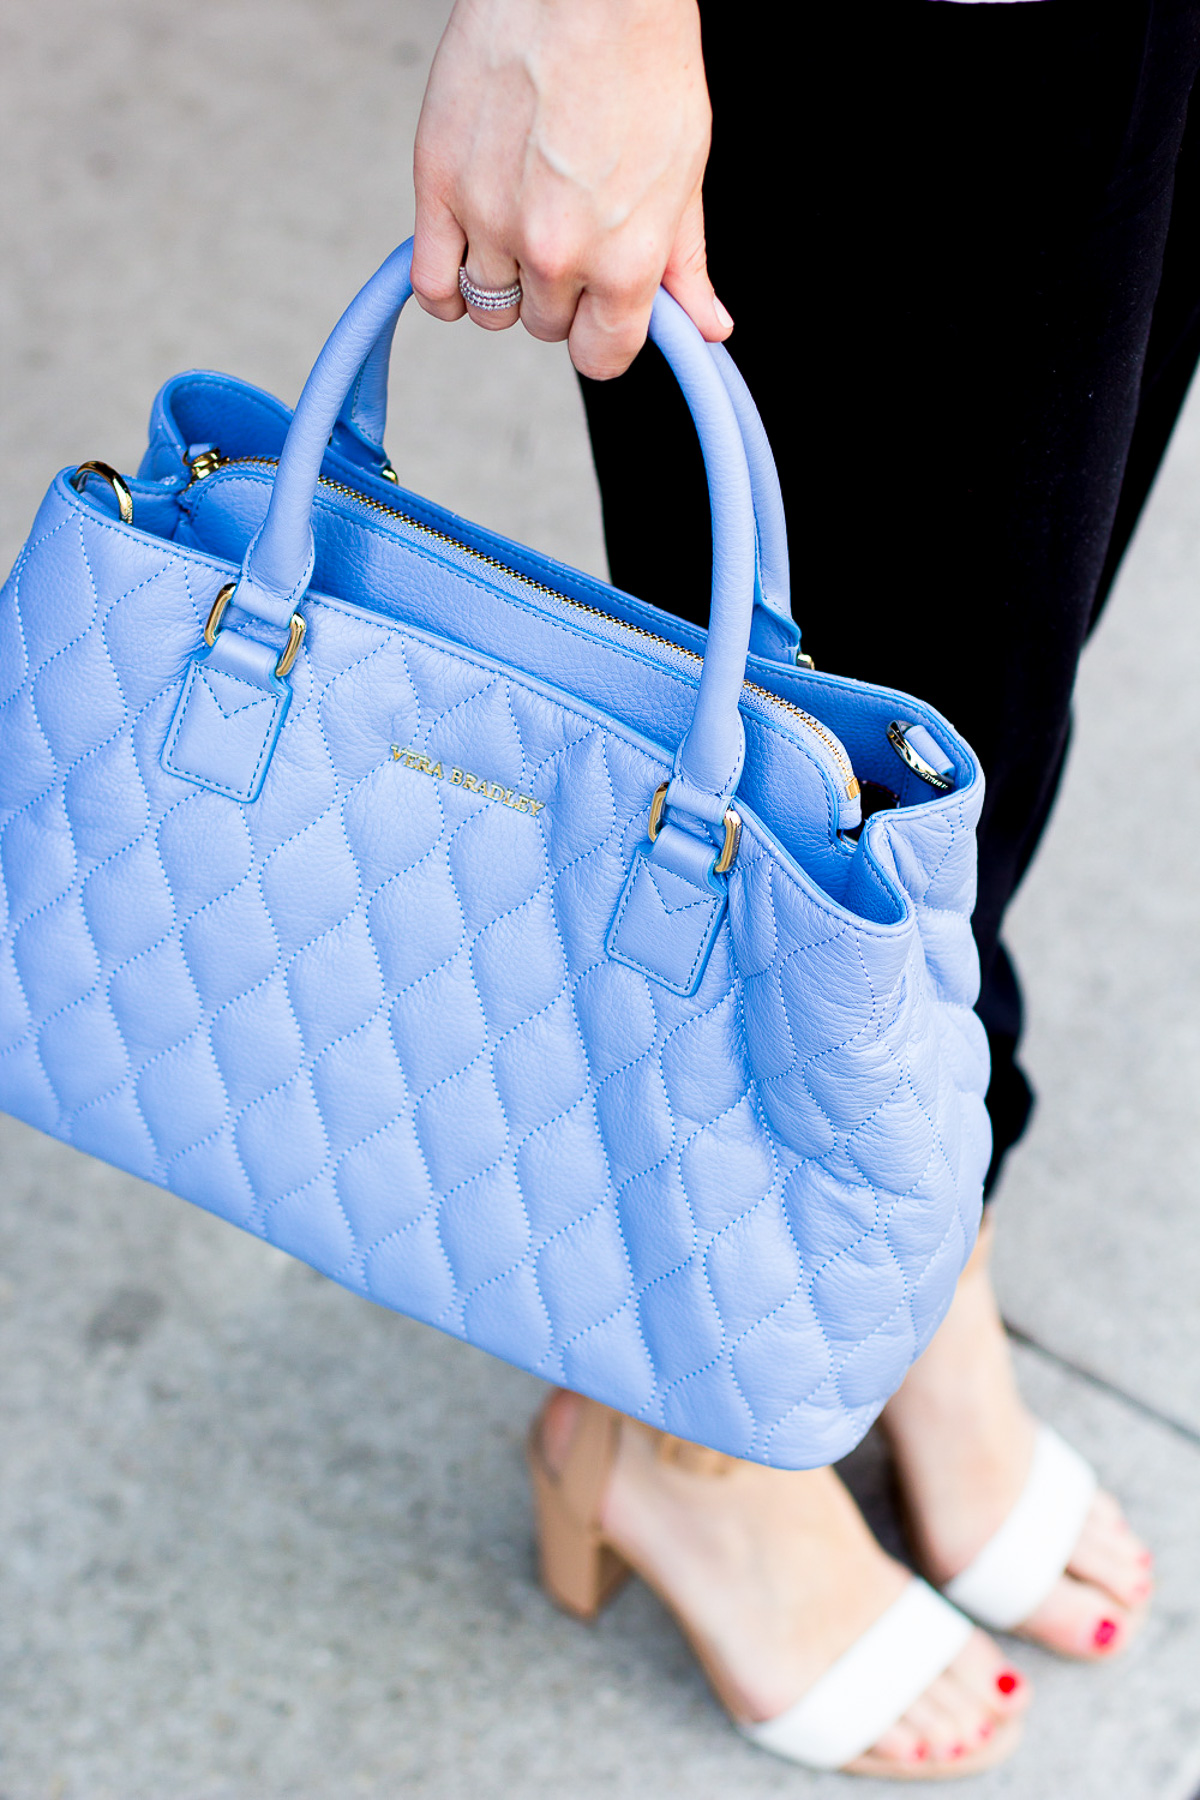 Vera Bradley Purse Top US Fashion Blogger How to style a blue purse 5